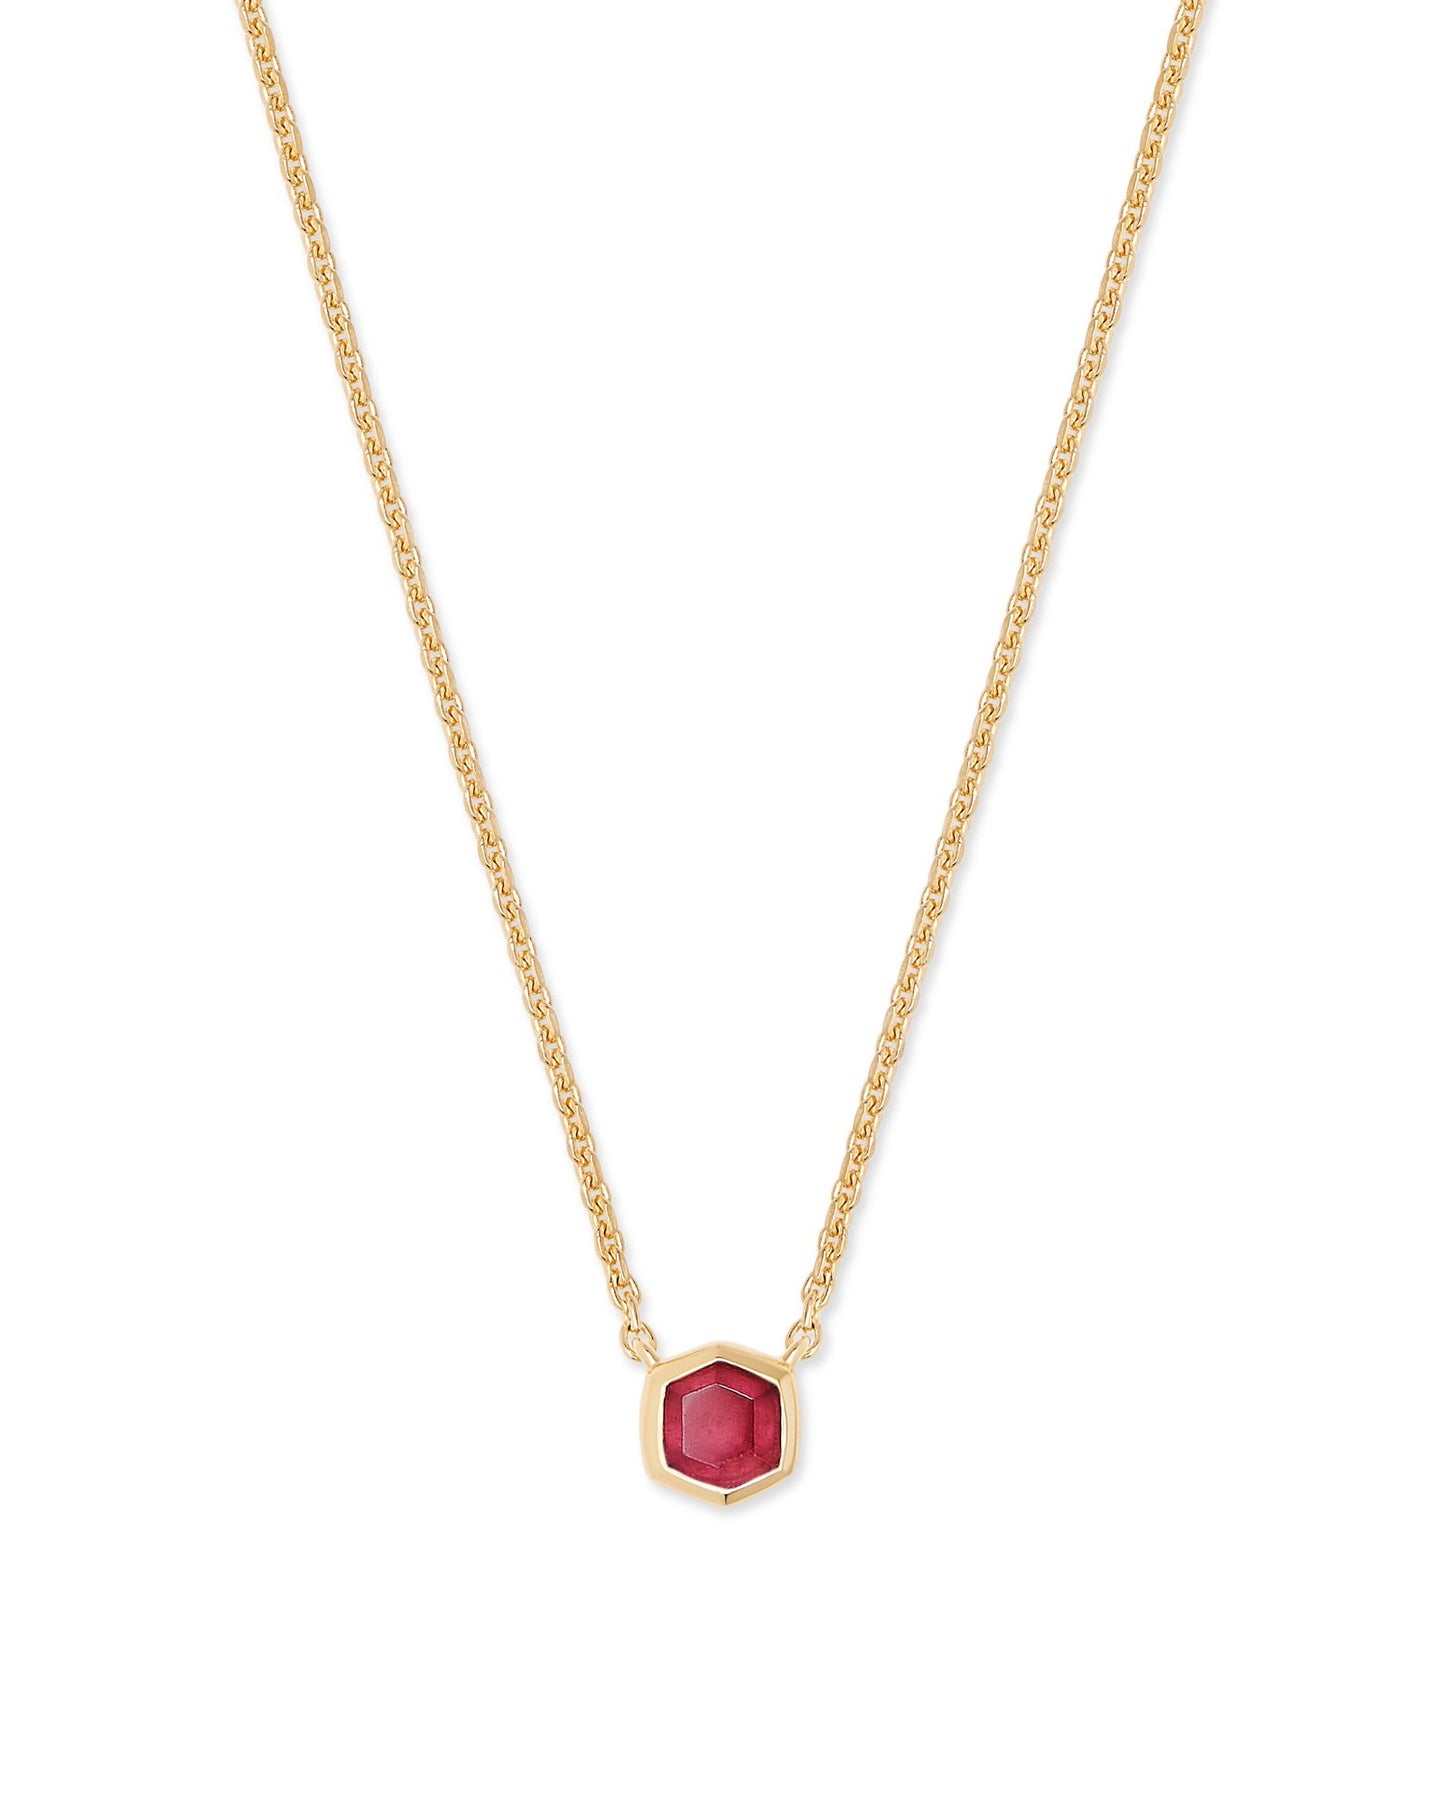 Kendra Scott Davie Pendant Necklace 18K Gold Vermeil Red Garnet-Necklaces-Kendra Scott-N1583GLD-The Twisted Chandelier